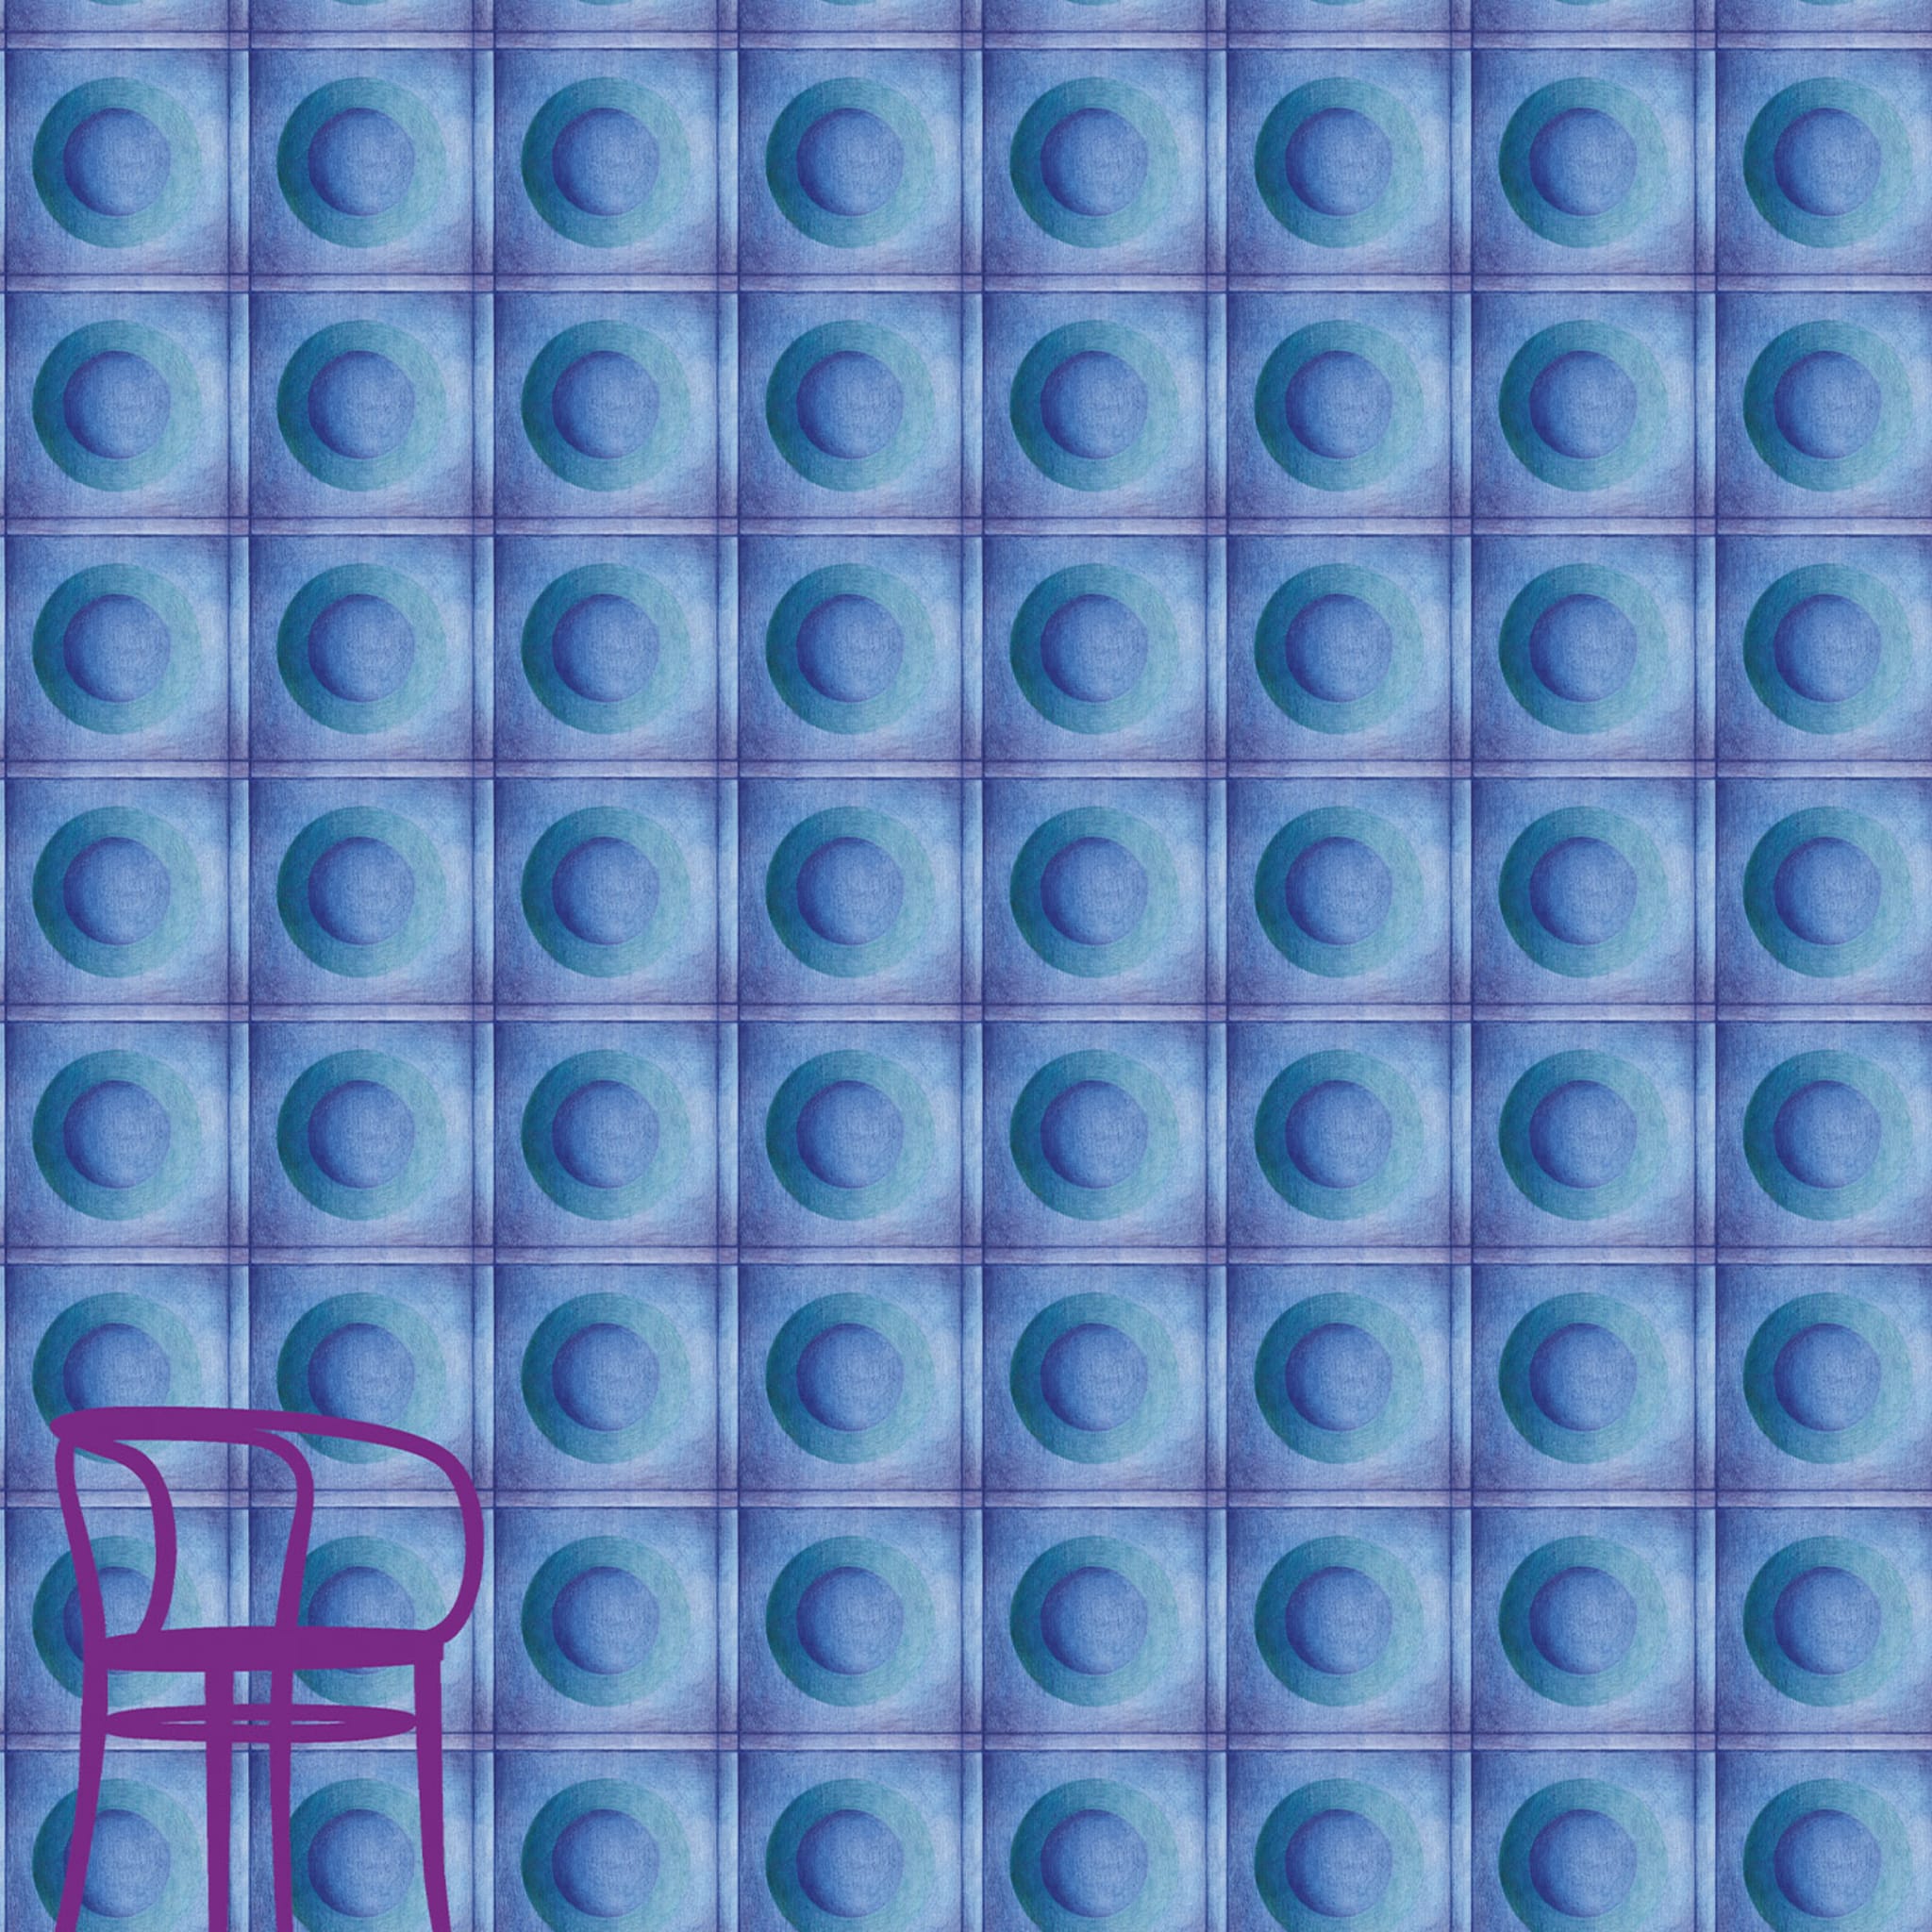 Meditation Dot Blue & Green Wallpaper - Alternative view 1